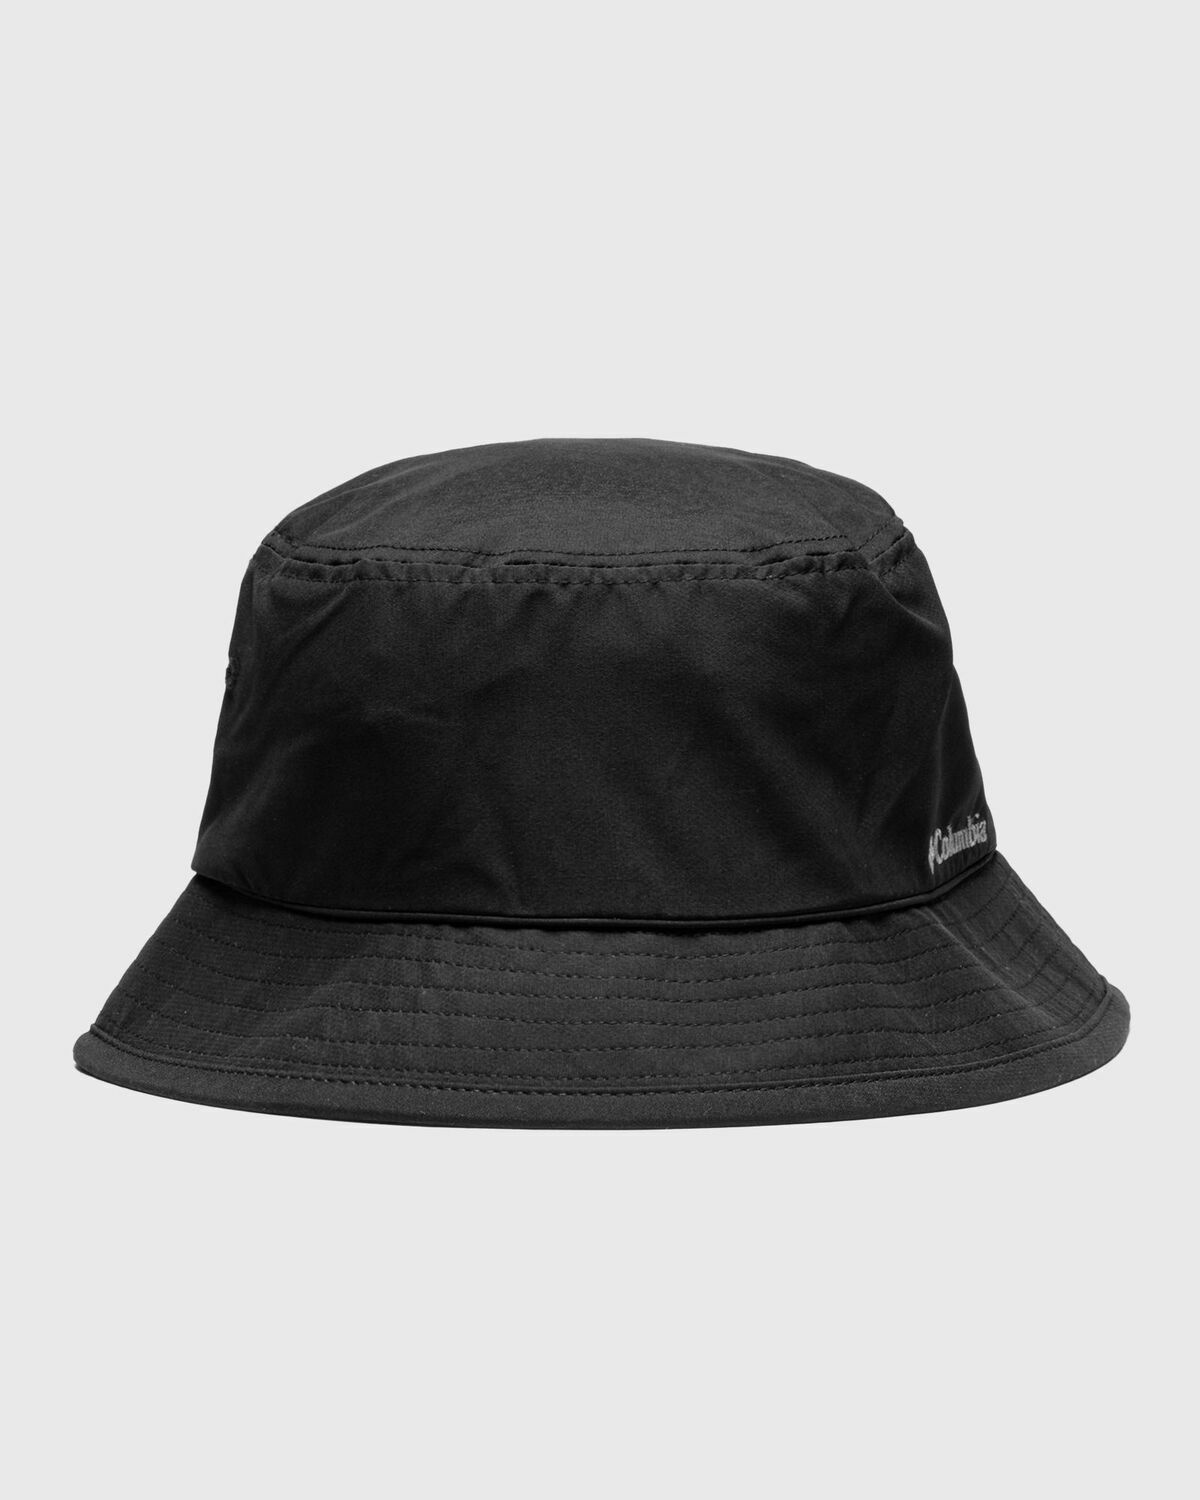 Columbia Pine Mountain Bucket Hat Black - Mens - Hats